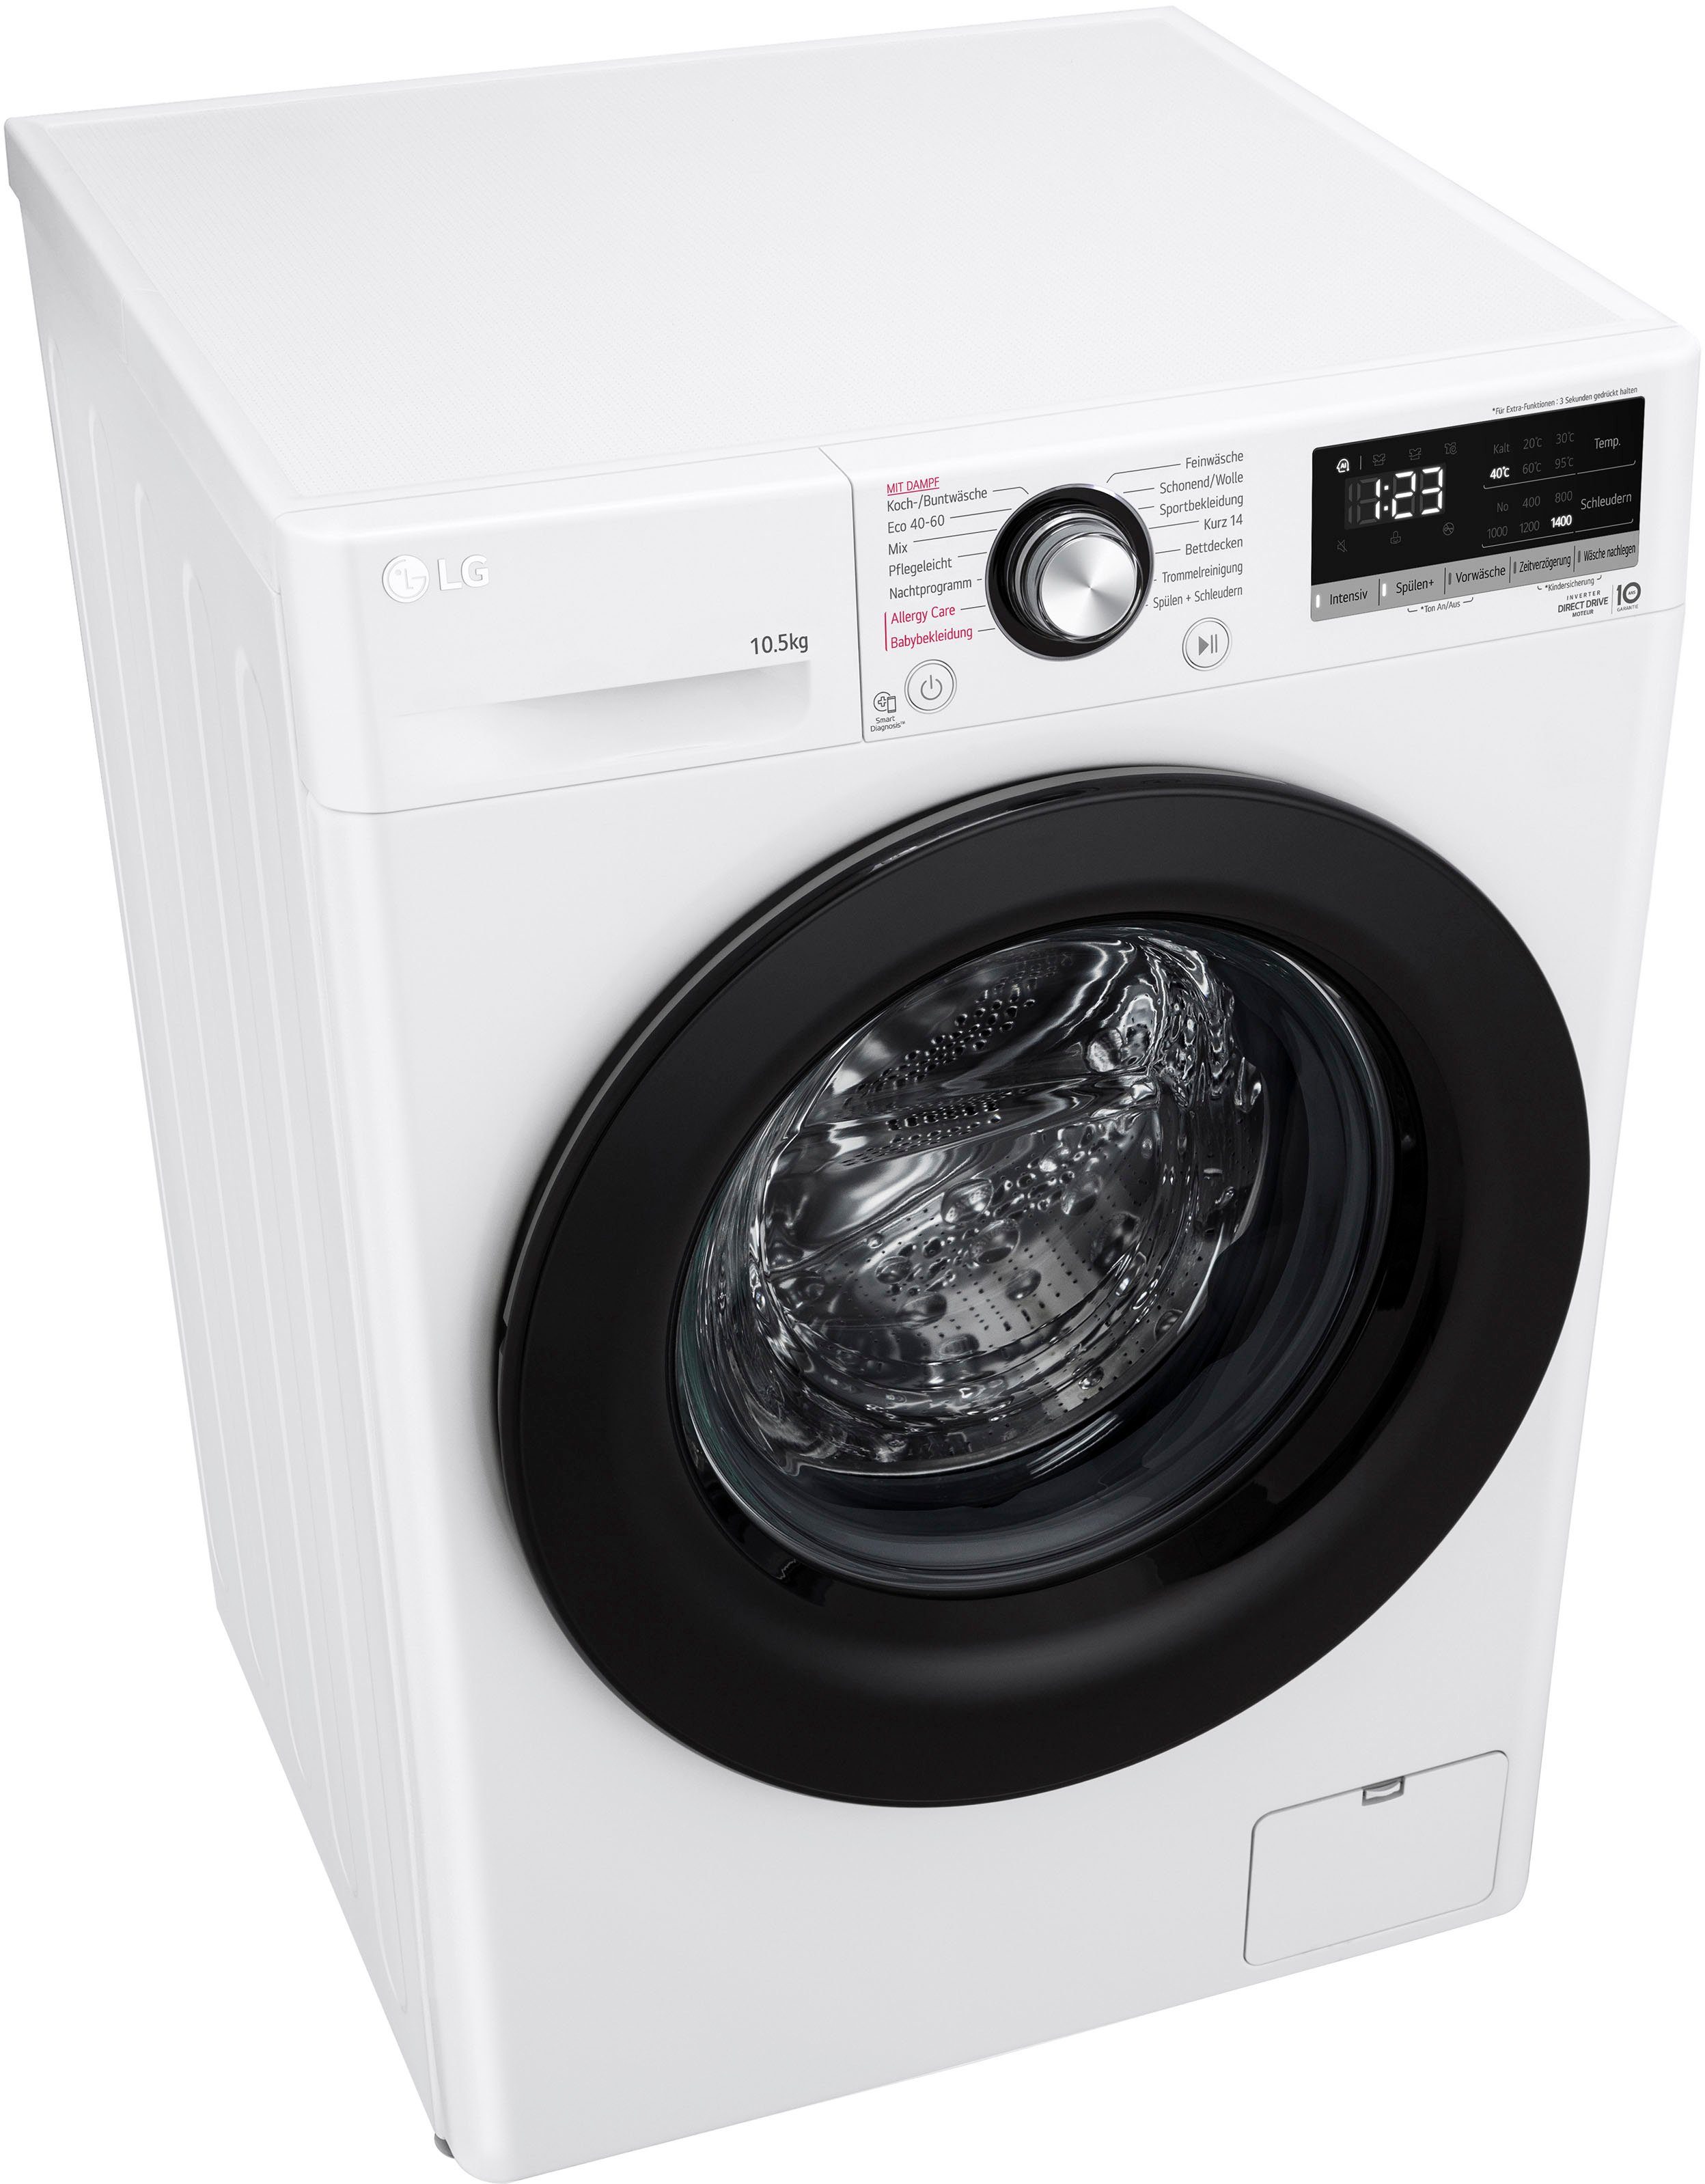 LG Waschmaschine F4WV40X5, kg, 10,5 1400 U/min